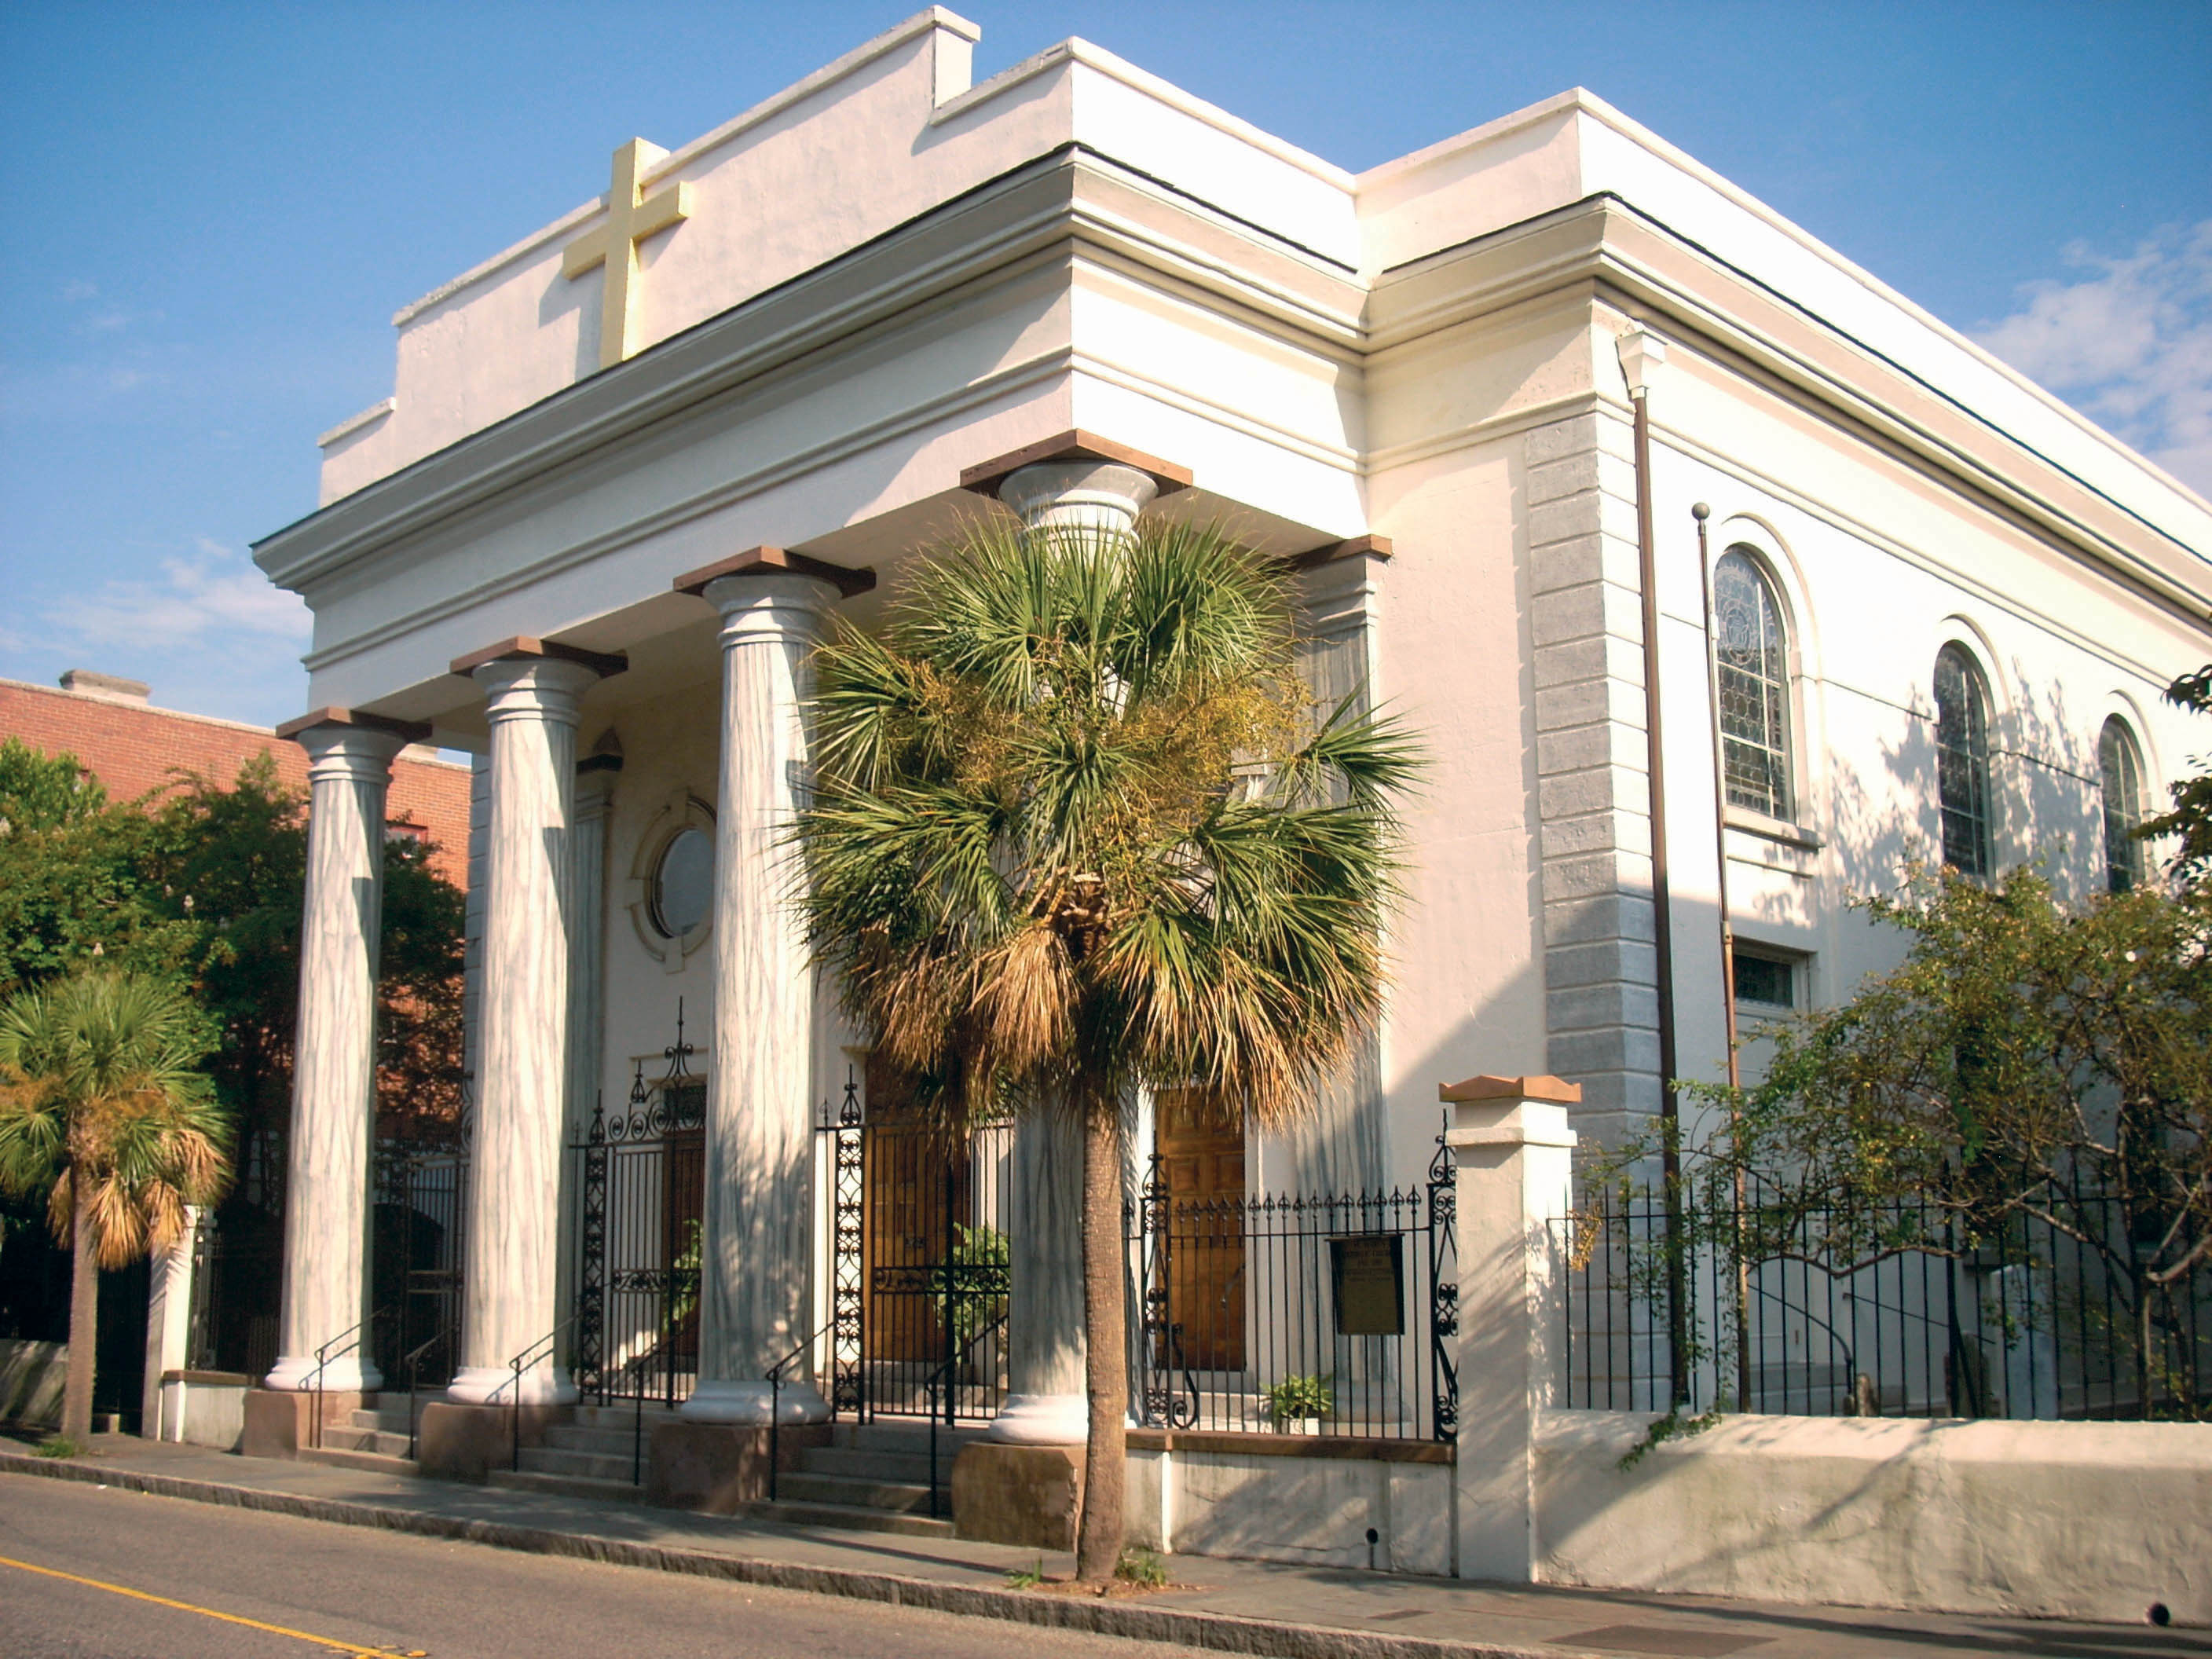 Charleston SC Historic Churches - A guide to Historic Charleston Churches